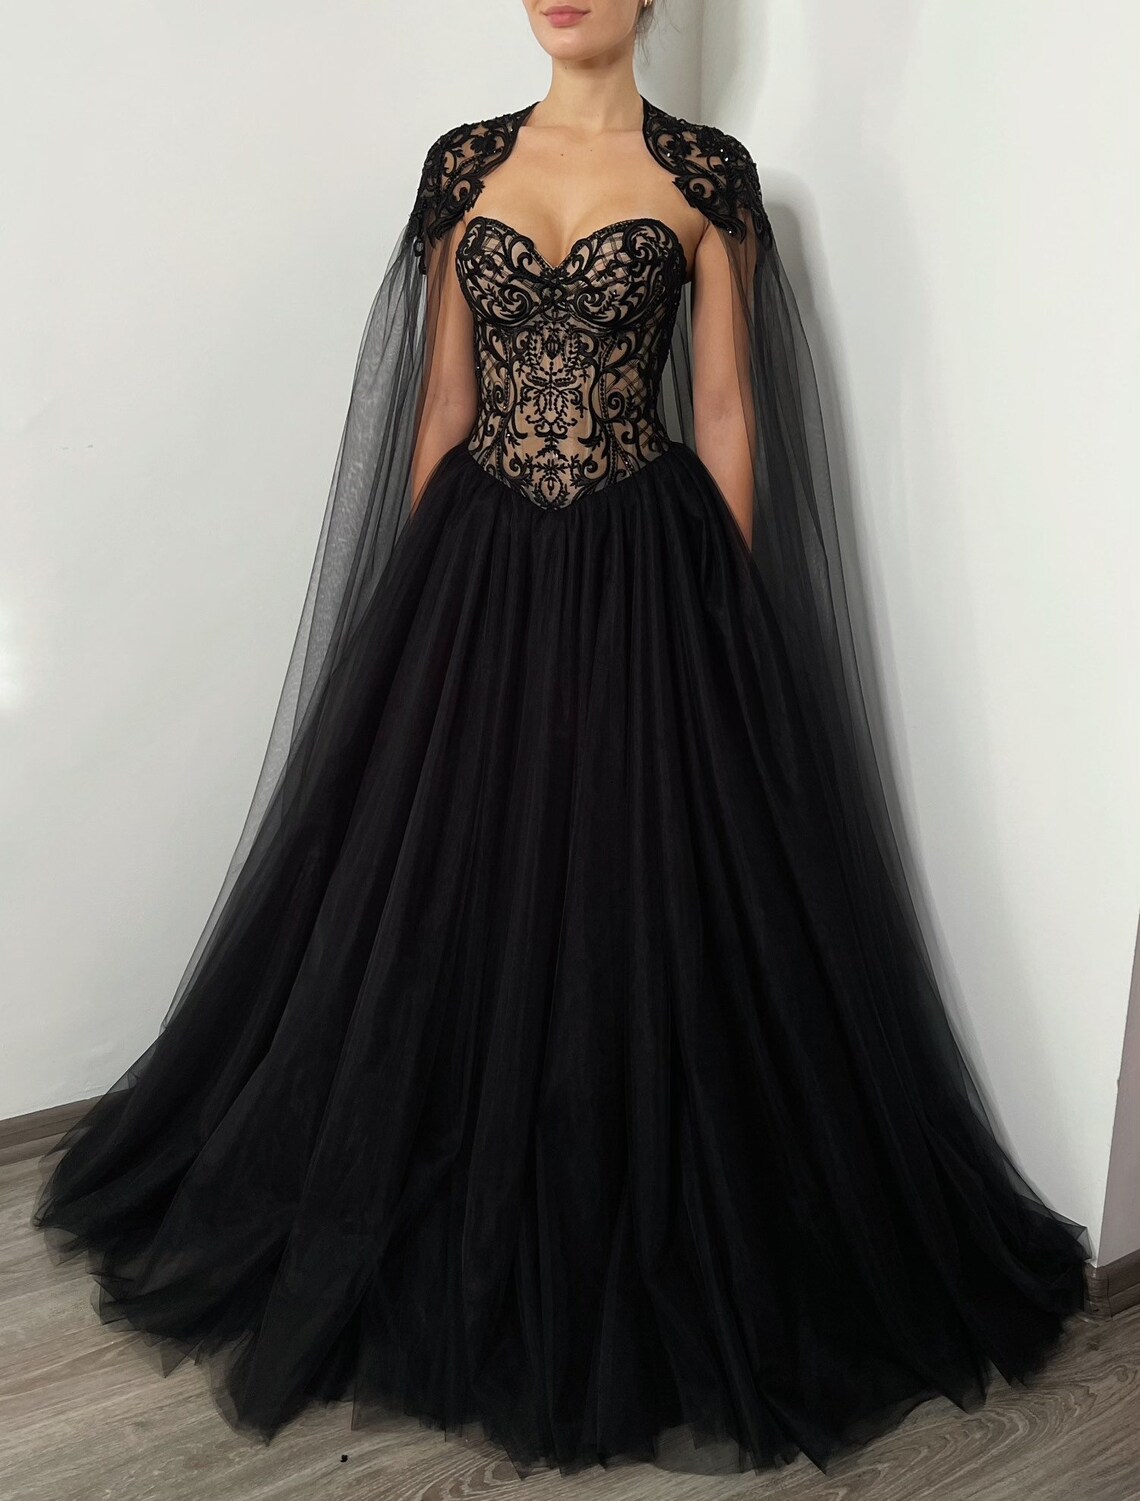 Black and Nude Gothic Beaded Corset Wedding Dress Alternative | Etsy